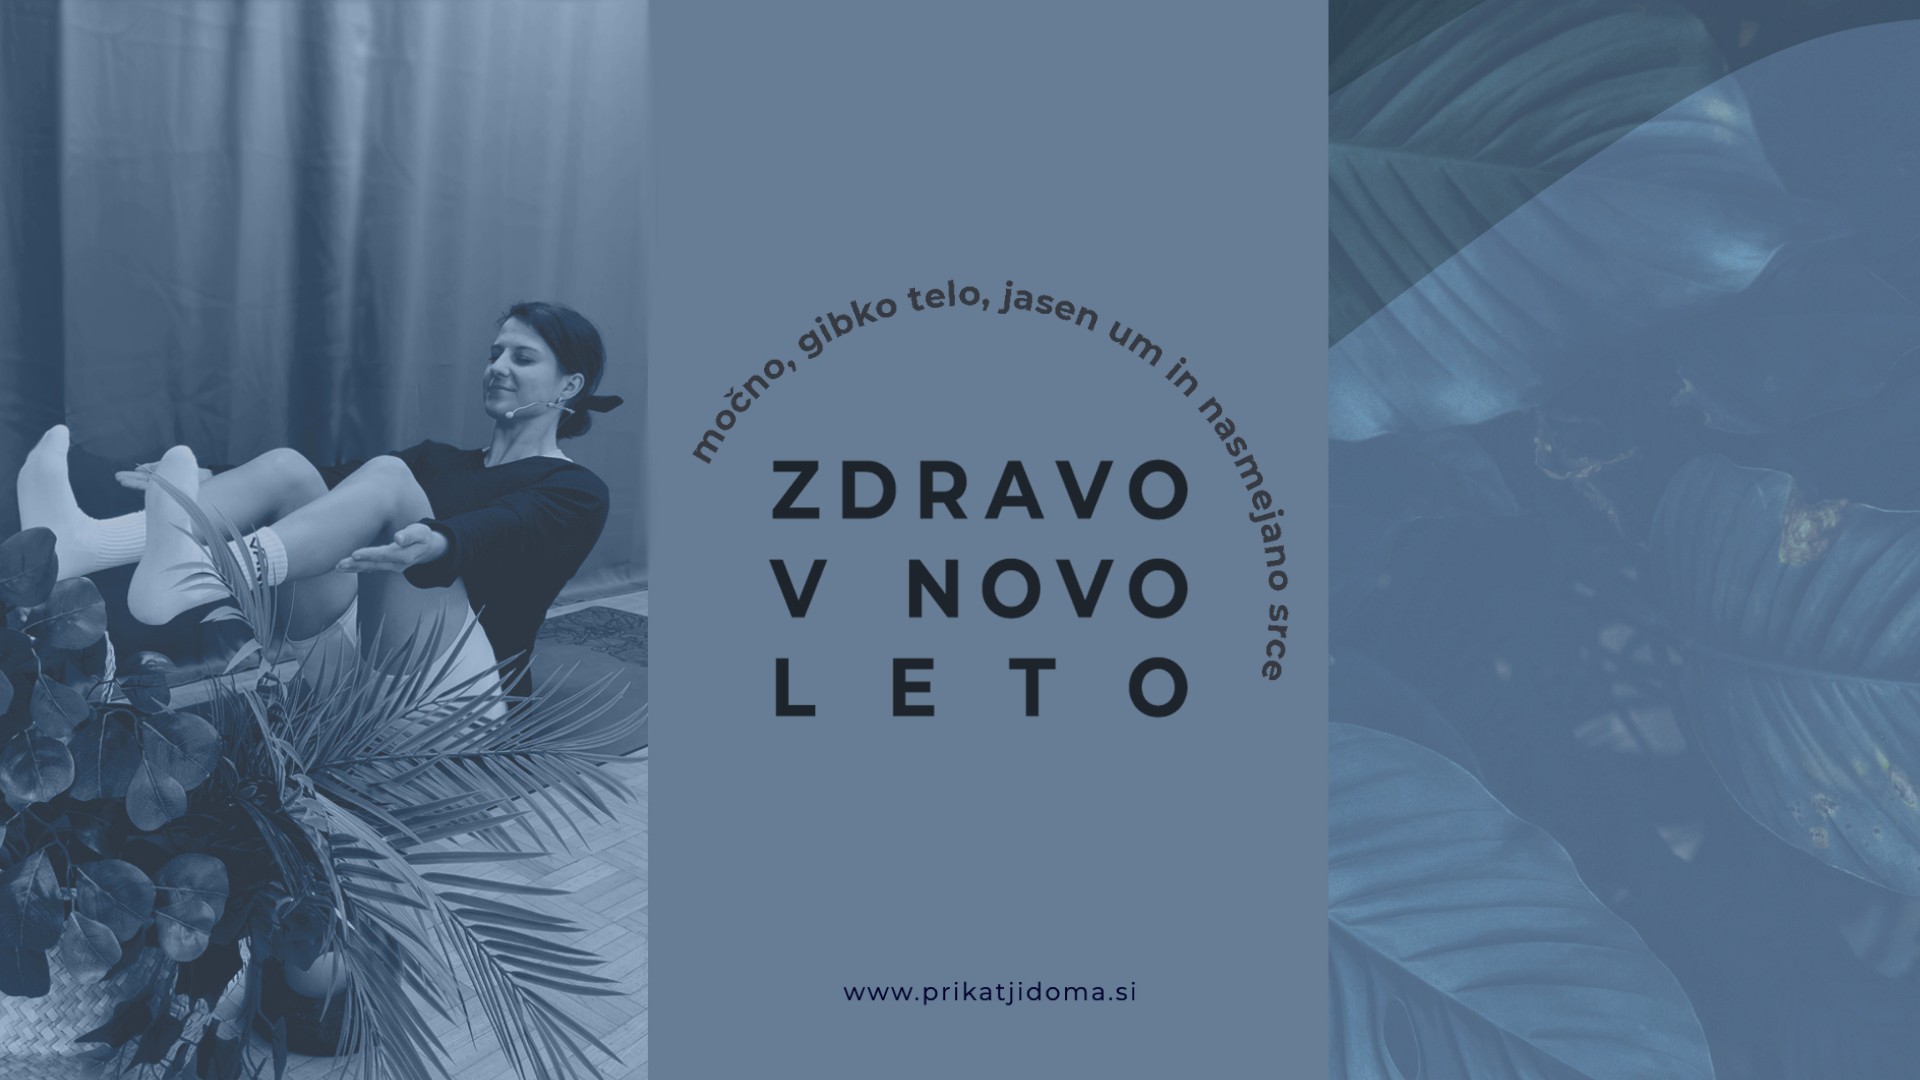 You are currently viewing Zdravo v novo leto